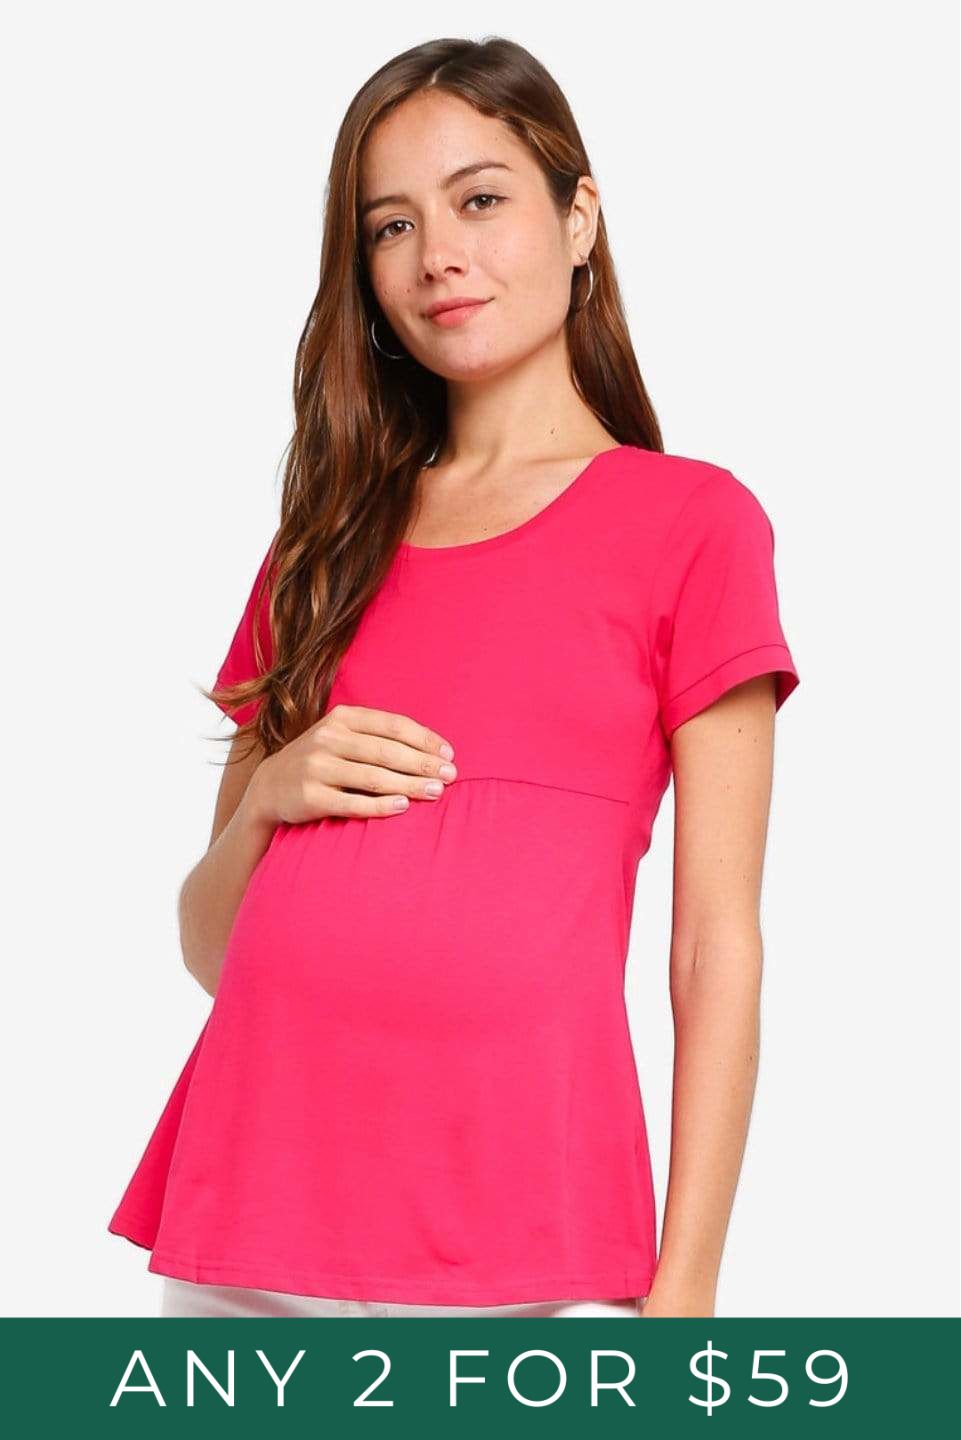 Jenny Round Neck Empire Line Red Short Sleeve Maternity Top Maternity Tops Maternity Wear Tops Spring Maternity